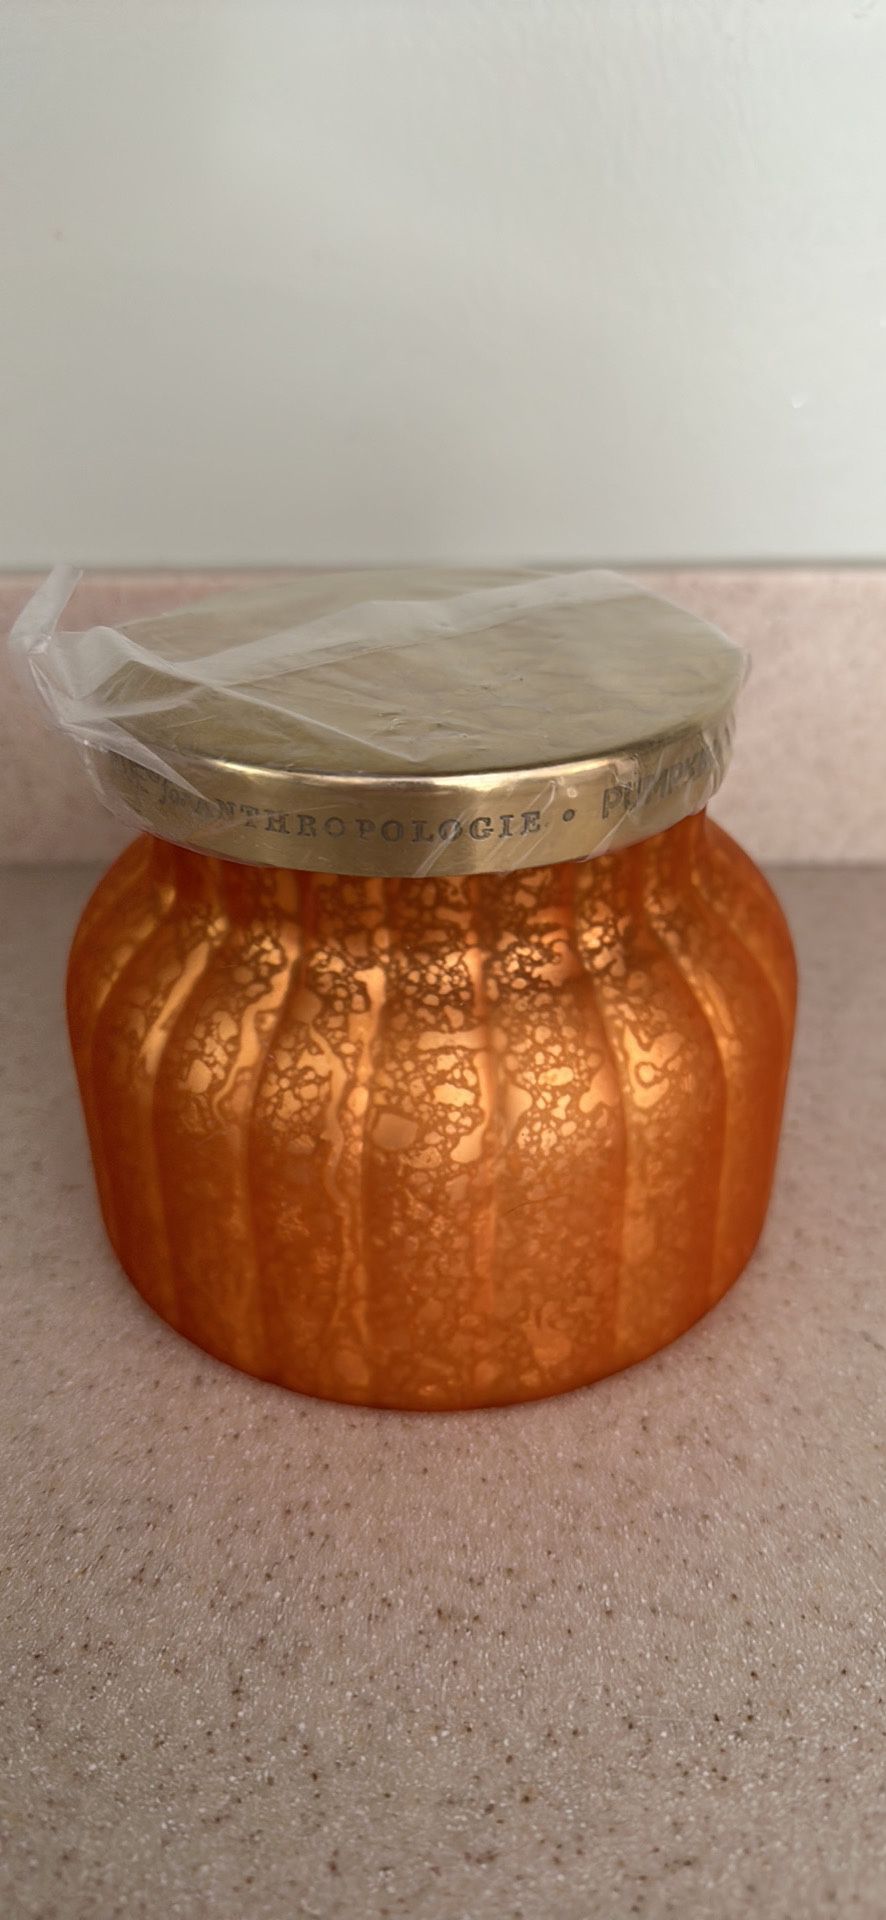 Pumpkin clove Anthropologie Candle